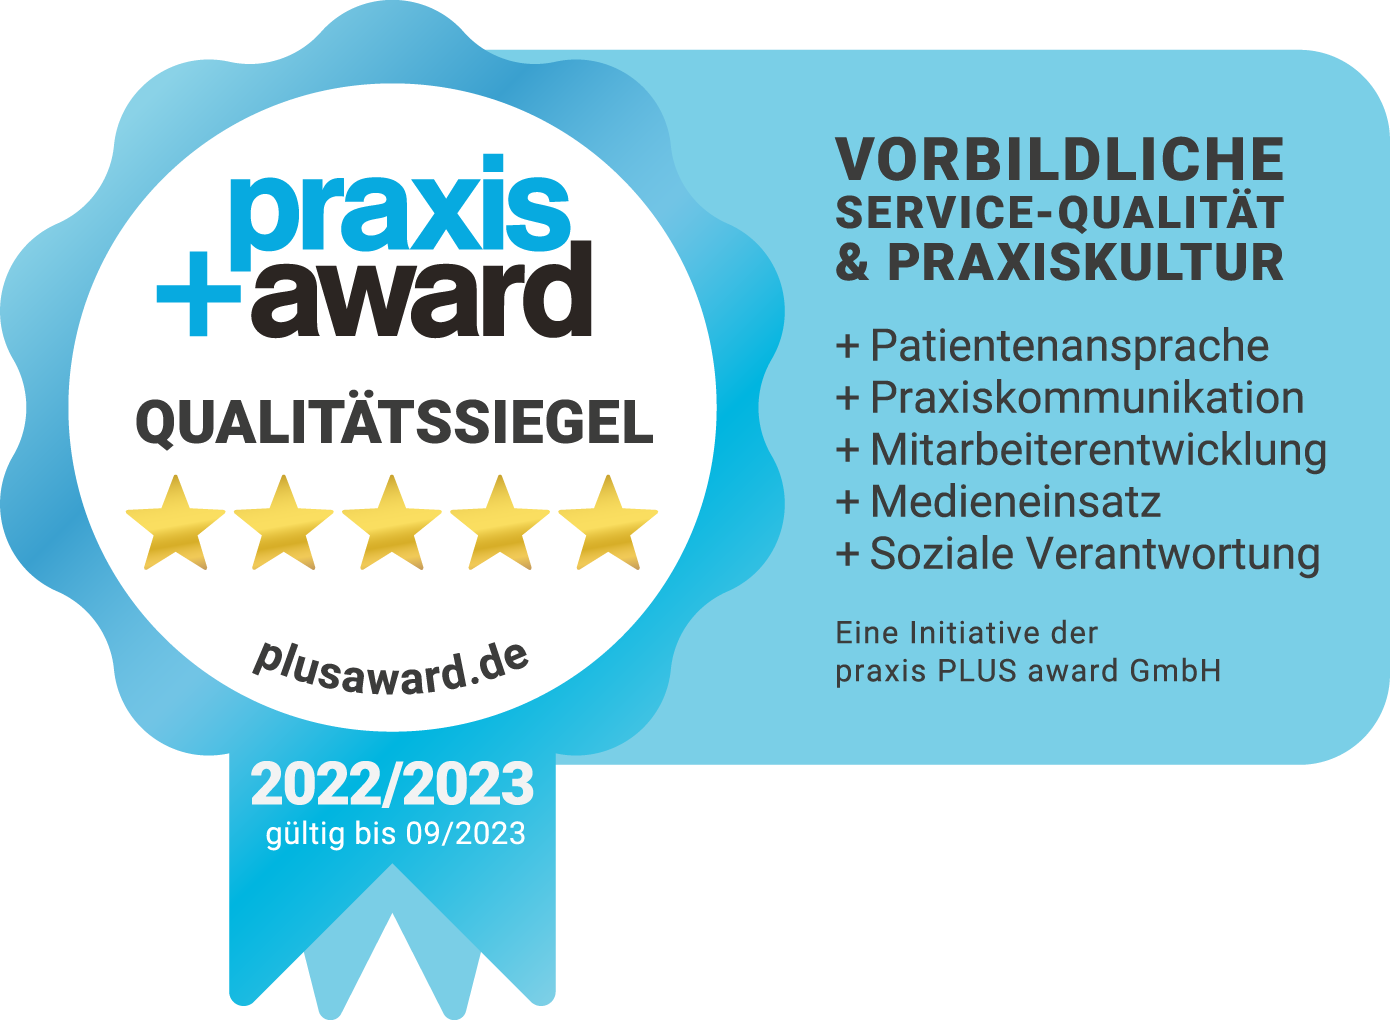 praxis+award 2022/2023